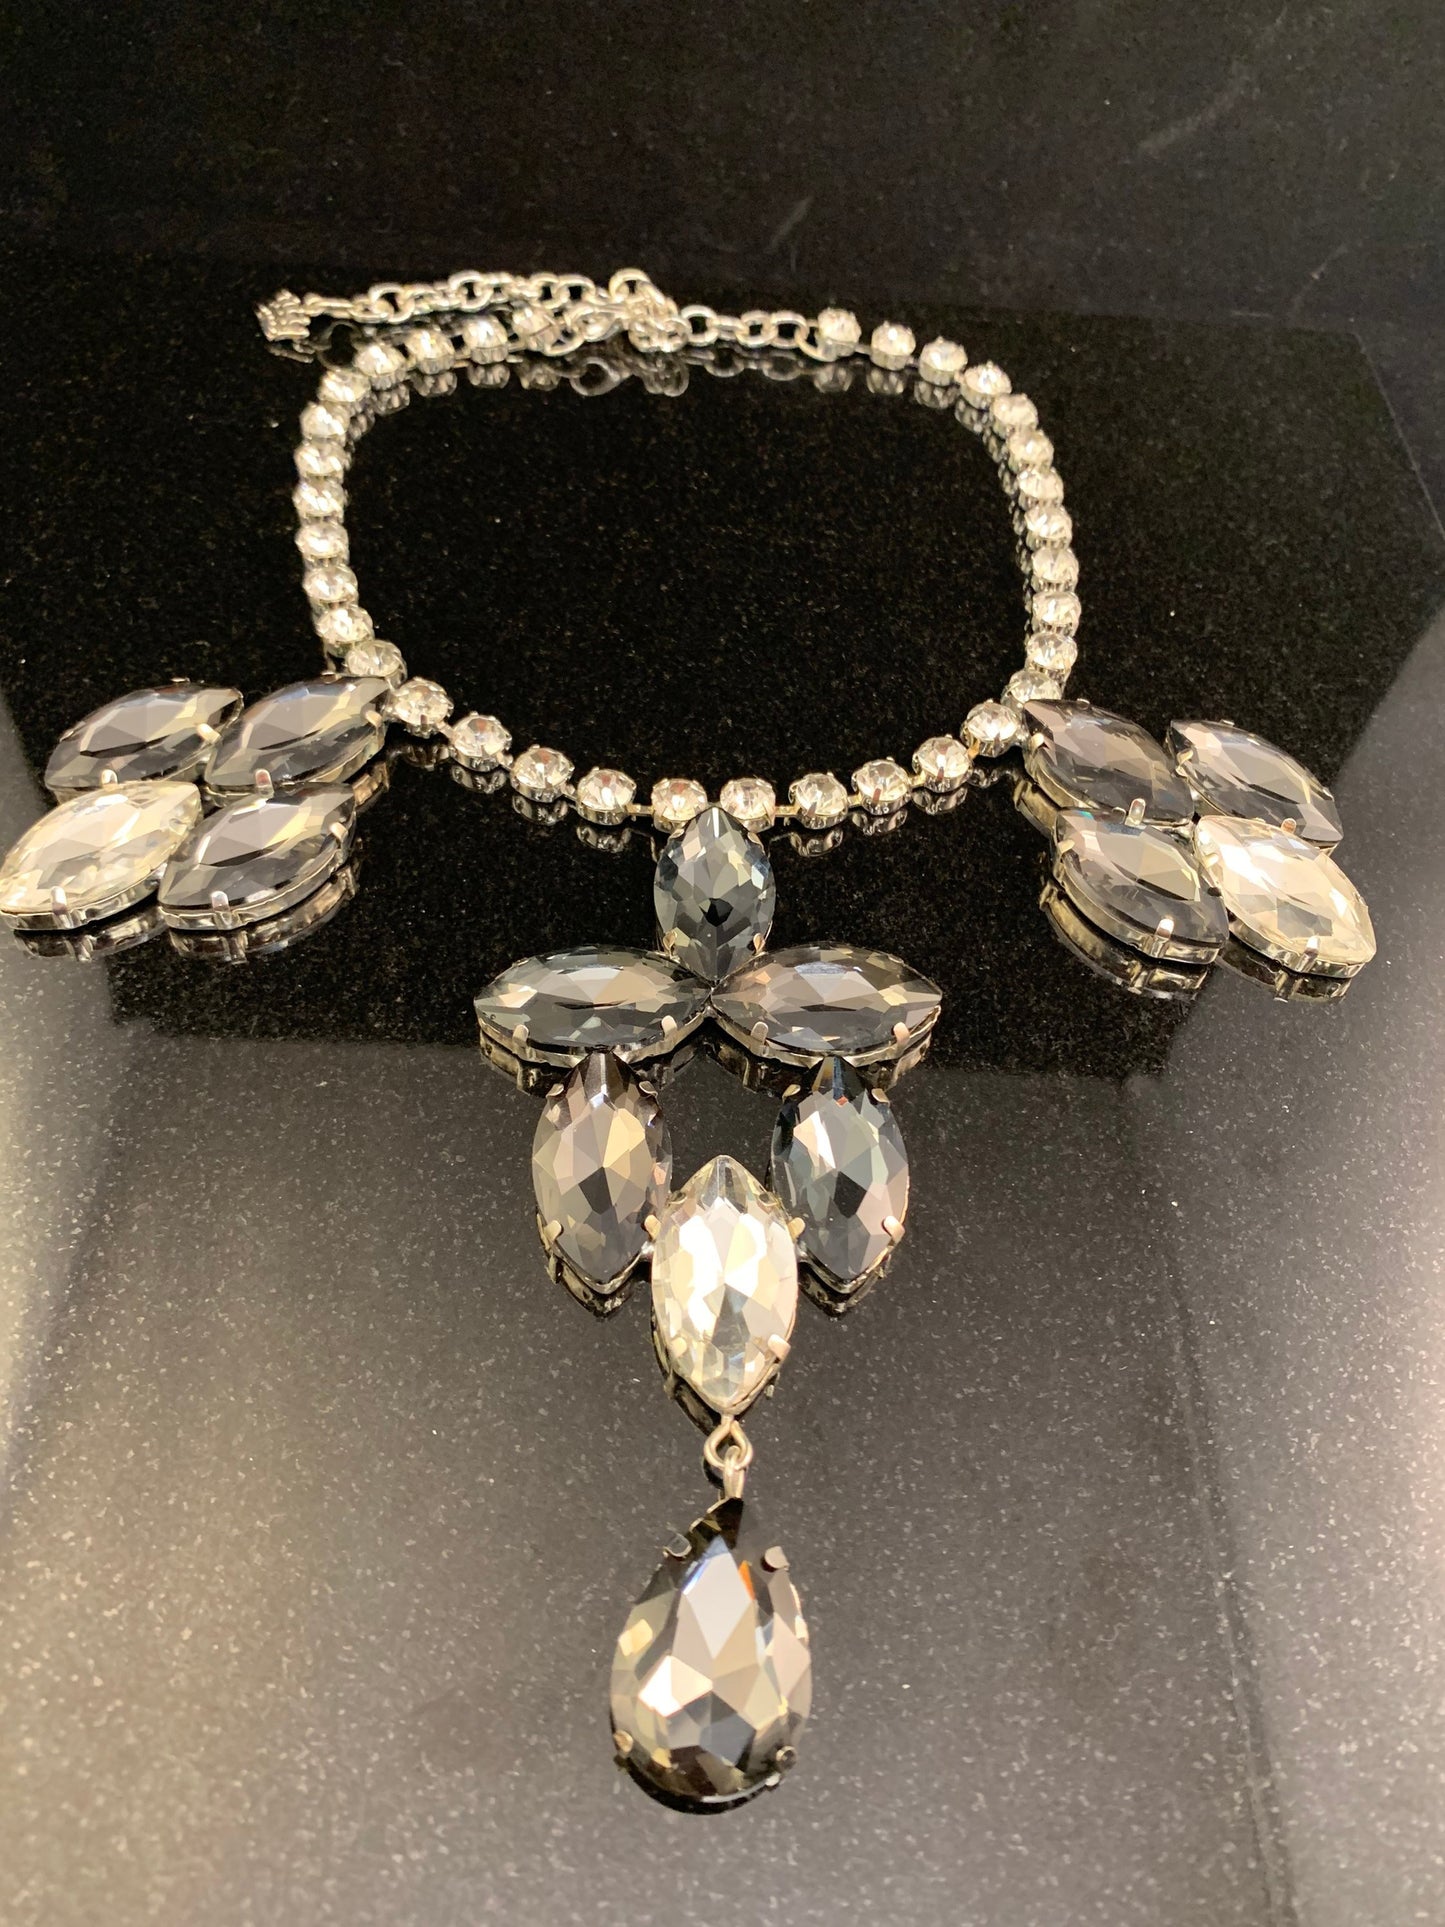 Black diamond Pendent Necklace / Adjustable / Drag Queen Costume Jewelry / Cocktails Jewellery